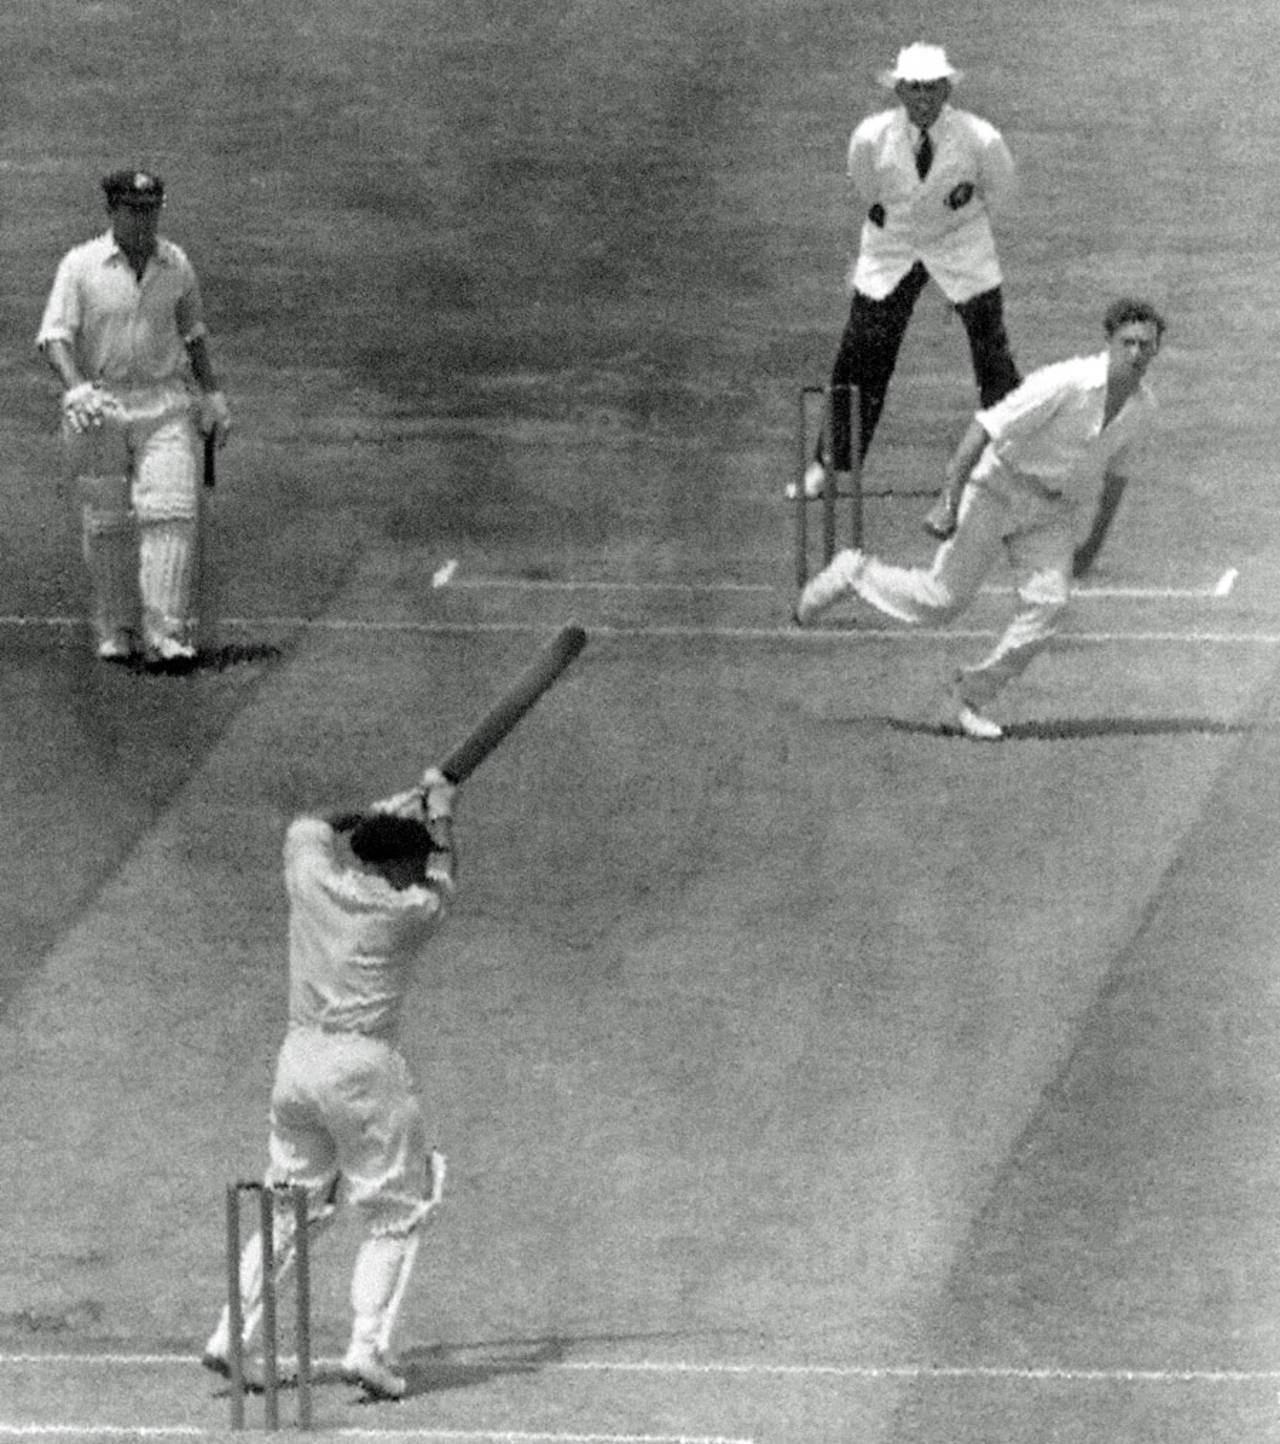 Les Favell cuts a ball Brian Statham as his team-mate Arthur Morris looks on, Australia v England, 3rd Test, MCG, 2nd day, January 1, 1955